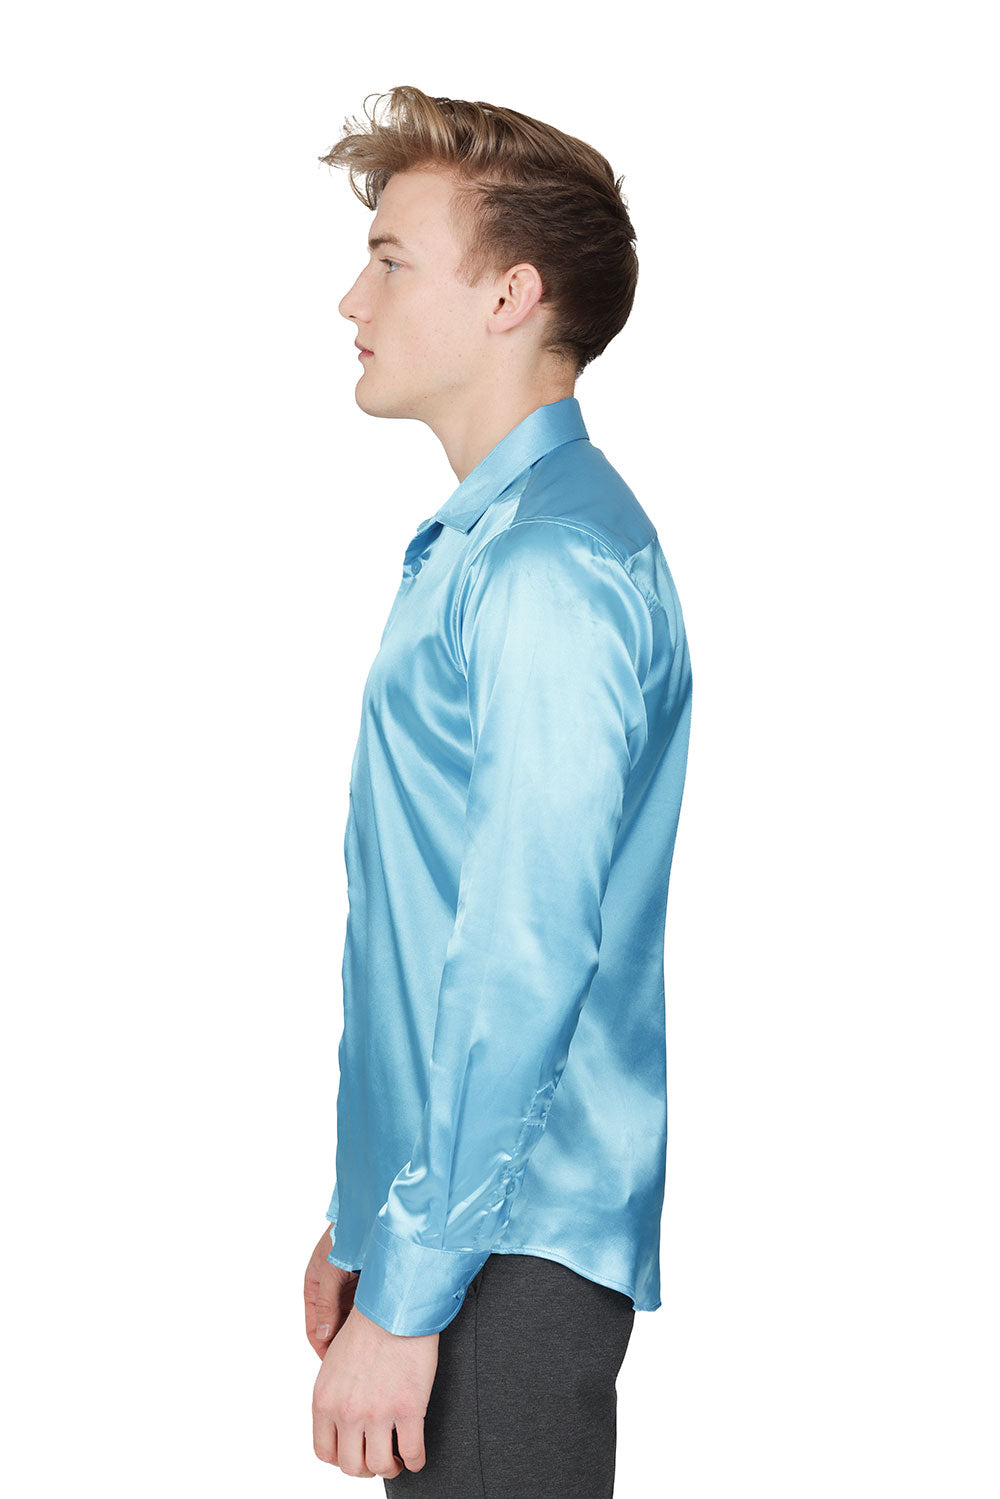 BARABAS Mens Luxury Shiny Long Sleeve Button Down Metallic Shirts B312 Blue